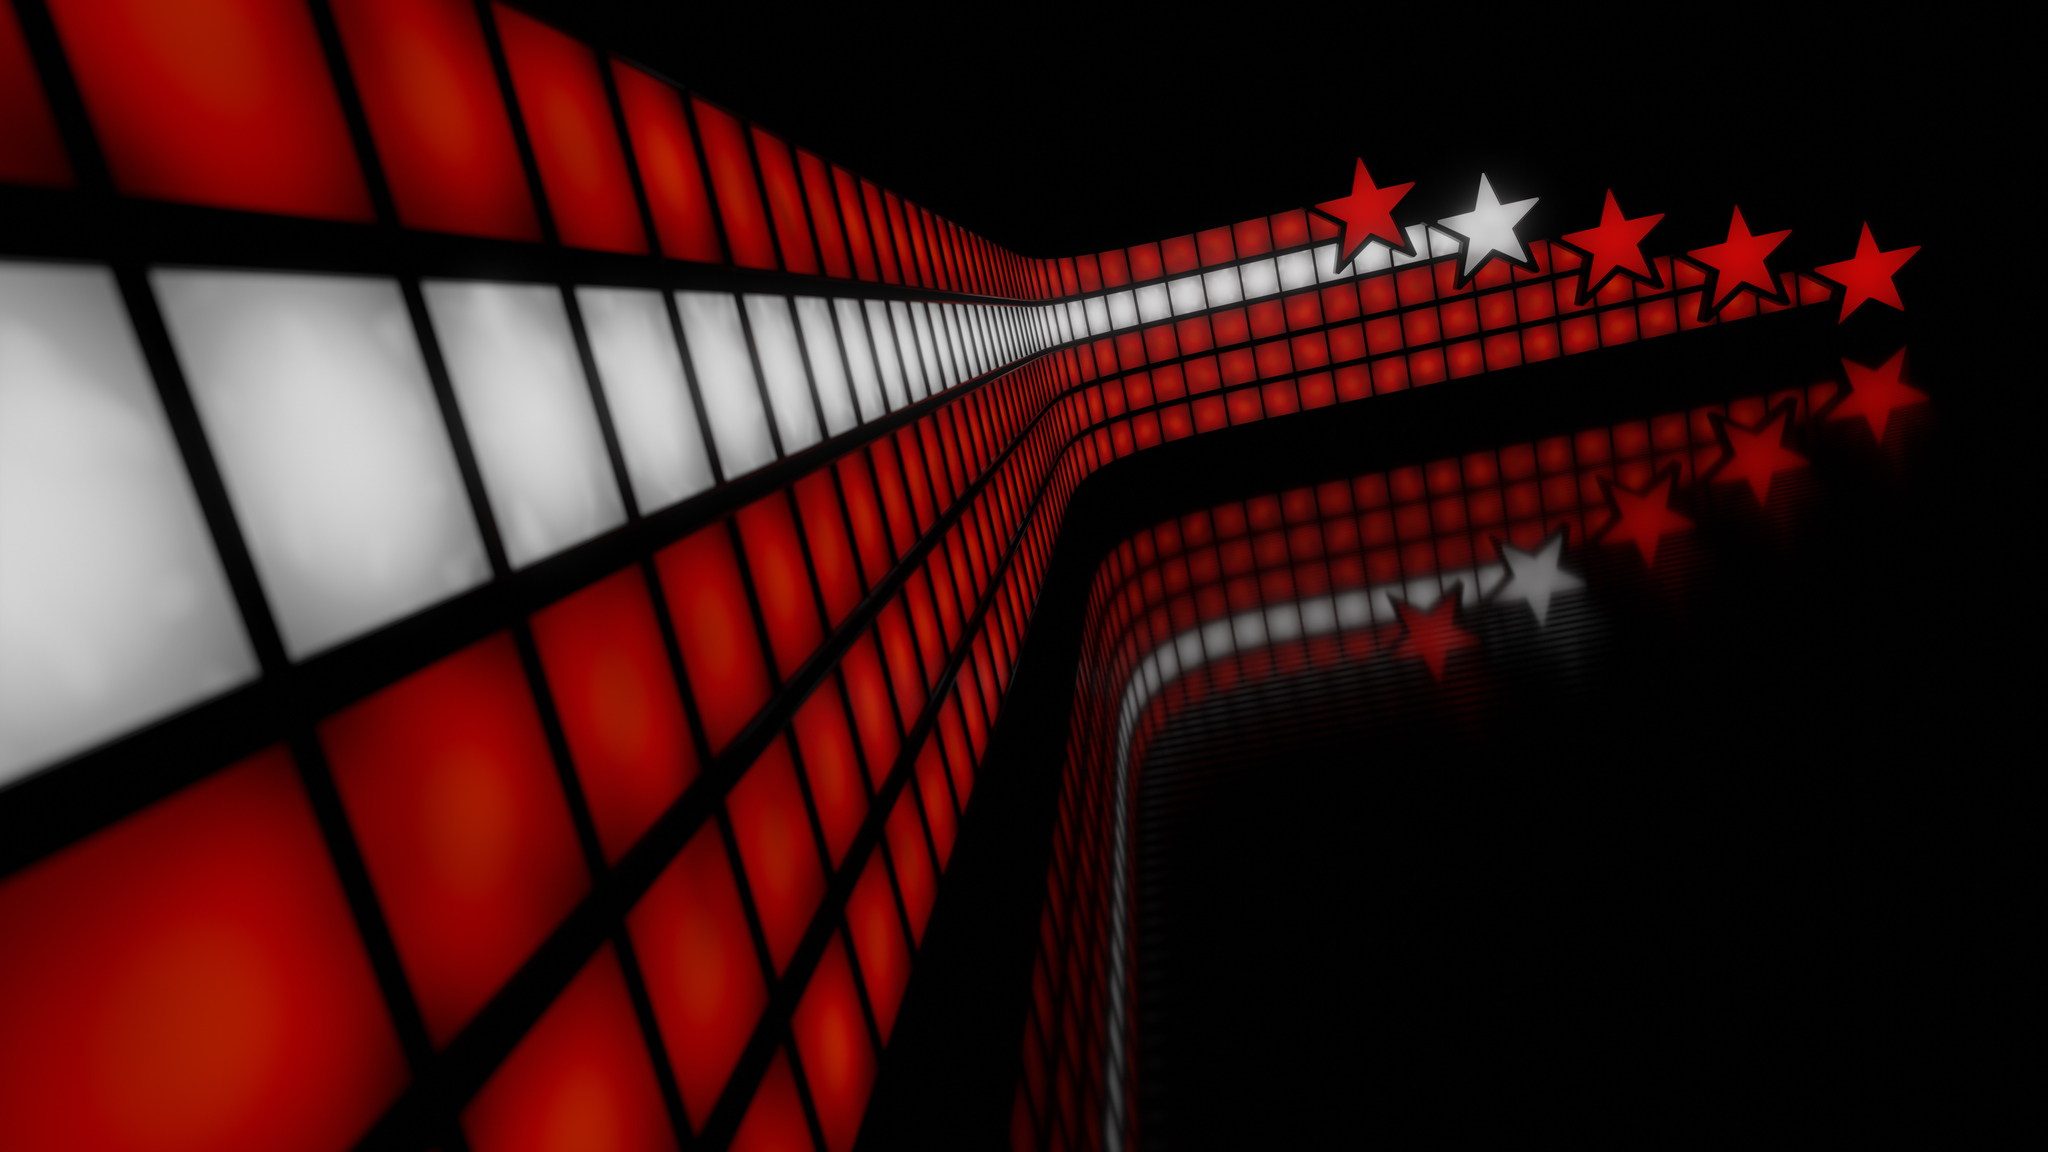 stars-disco-red-abstract-4k-9r.jpg